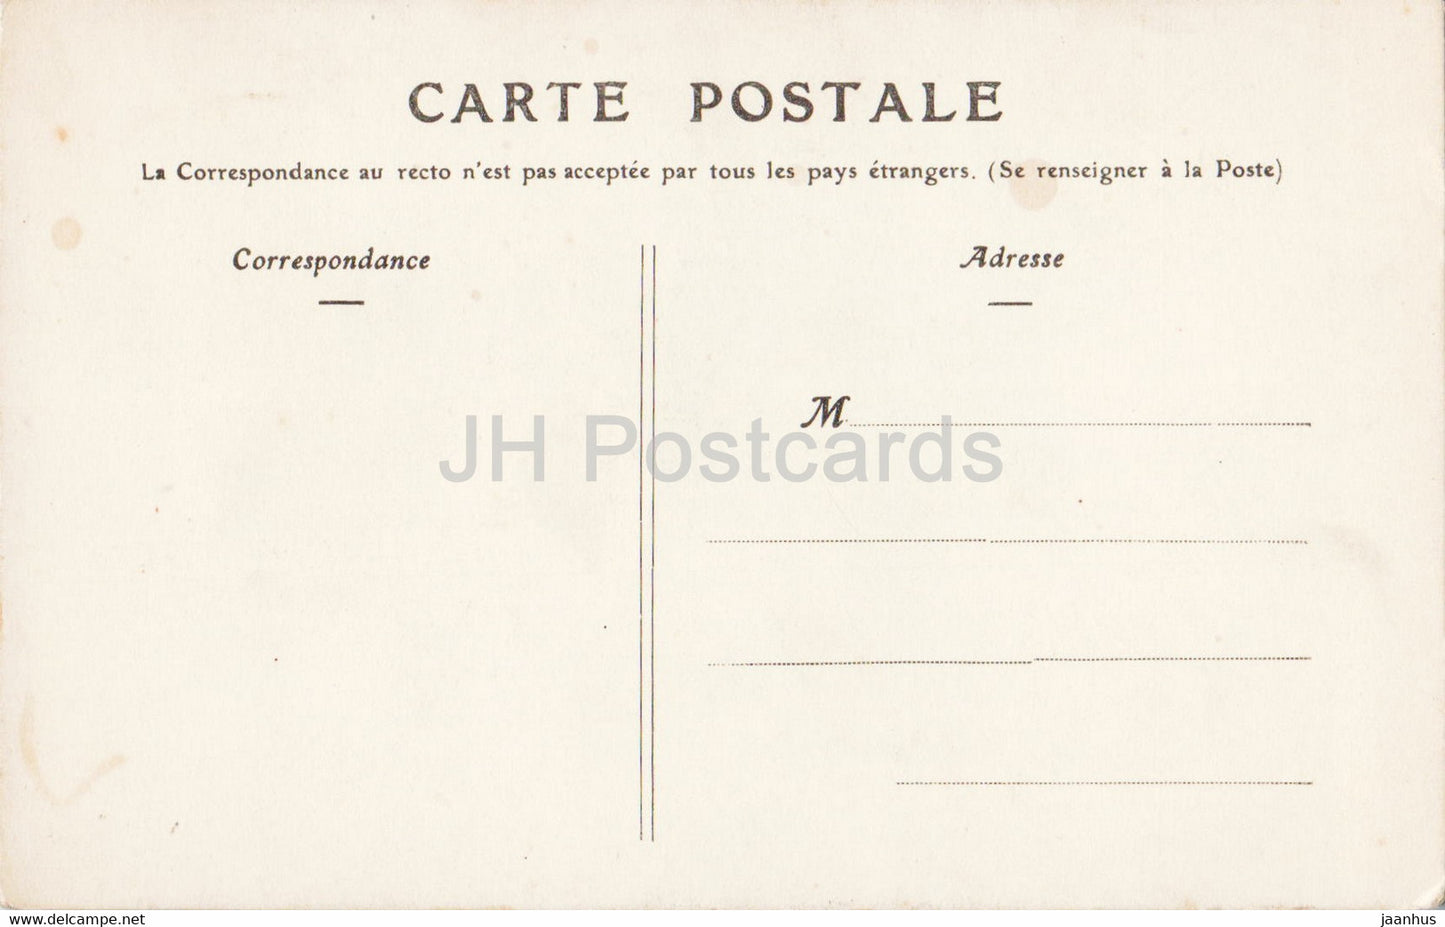 fleurs - illustration - carte postale ancienne - France - inutilisée